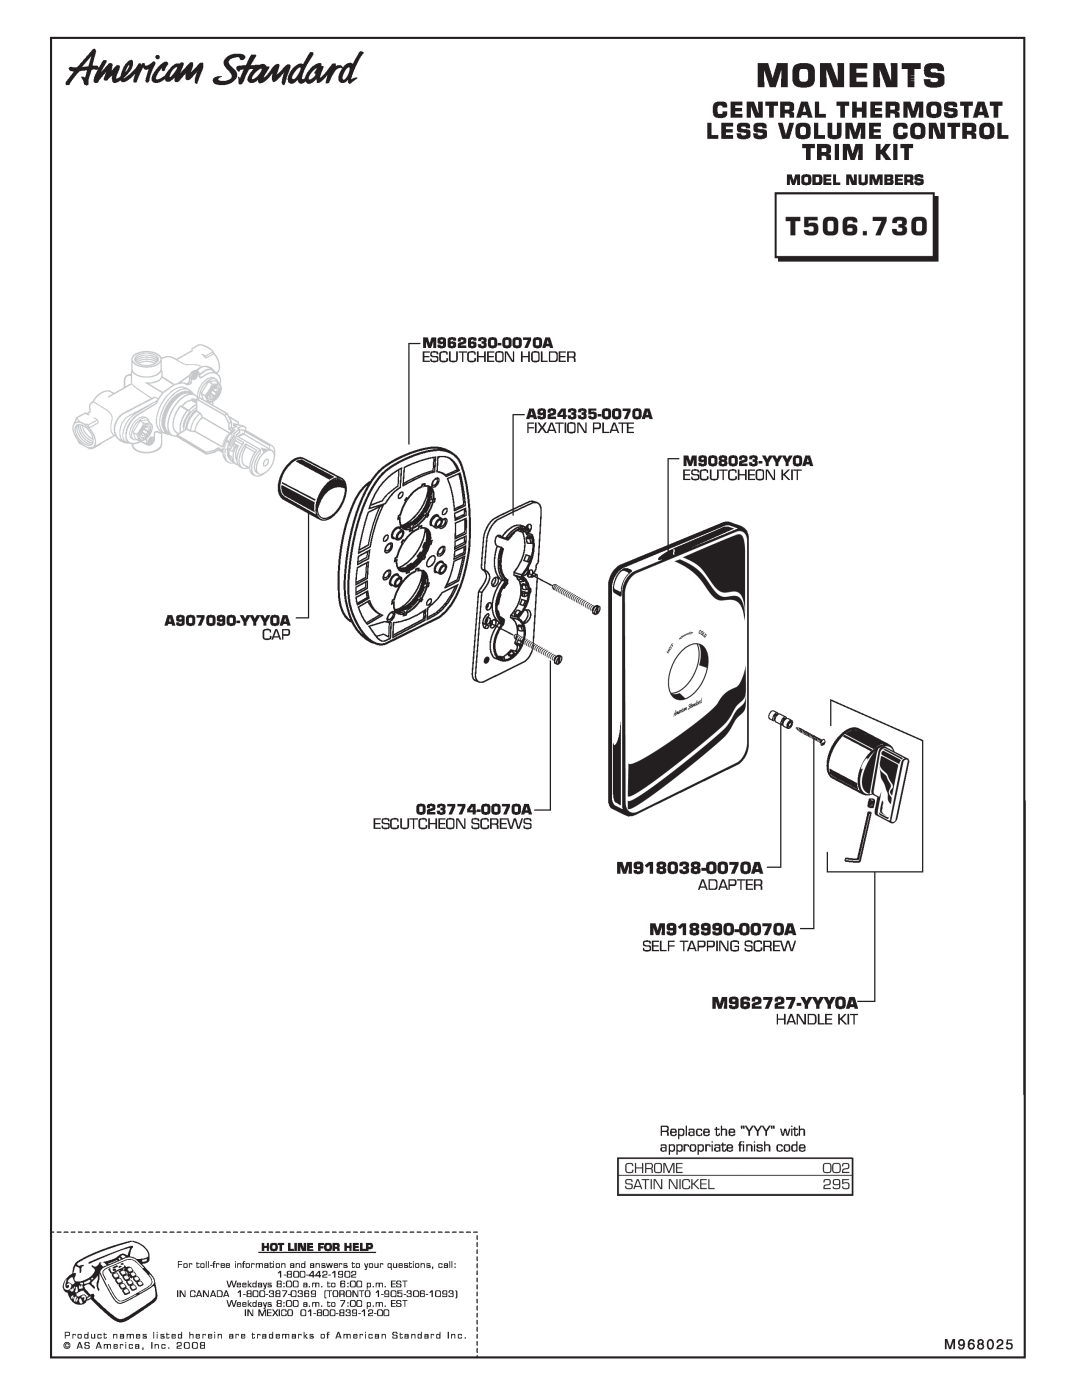 American Standard T506.730 Monents, Central Thermostat Less Volume Control Trim Kit, M918038-0070A, M918990-0070A, Chrome 